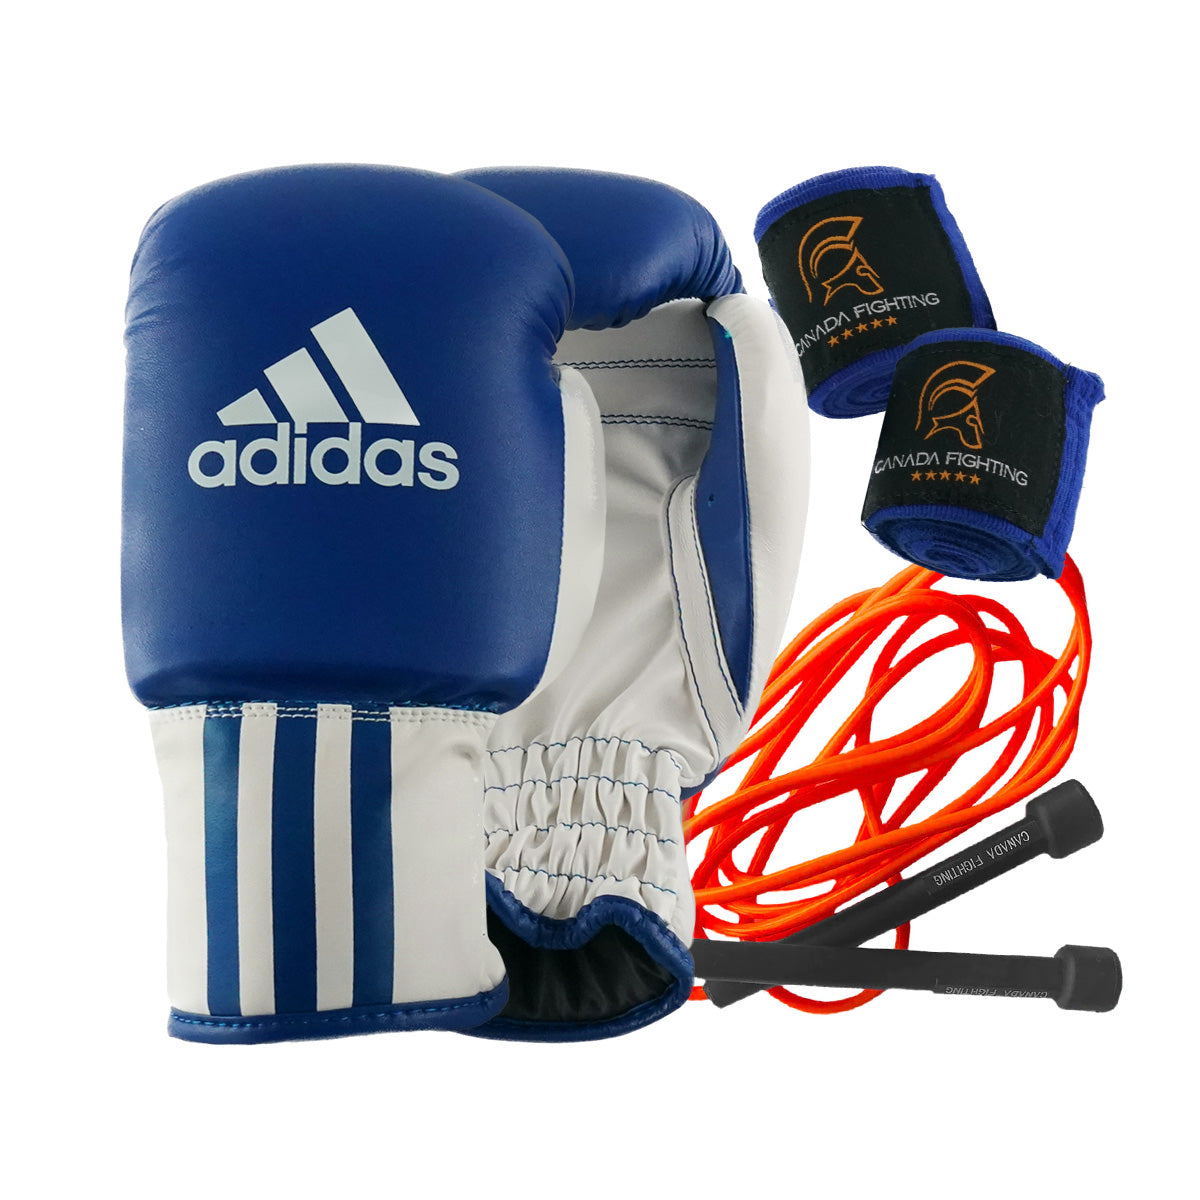 Kit de boxe Canada Fighting - Gants, corde et bandages - Junior-Accessoires-Canada Fighting®-Kit Junior-Canada Fighting